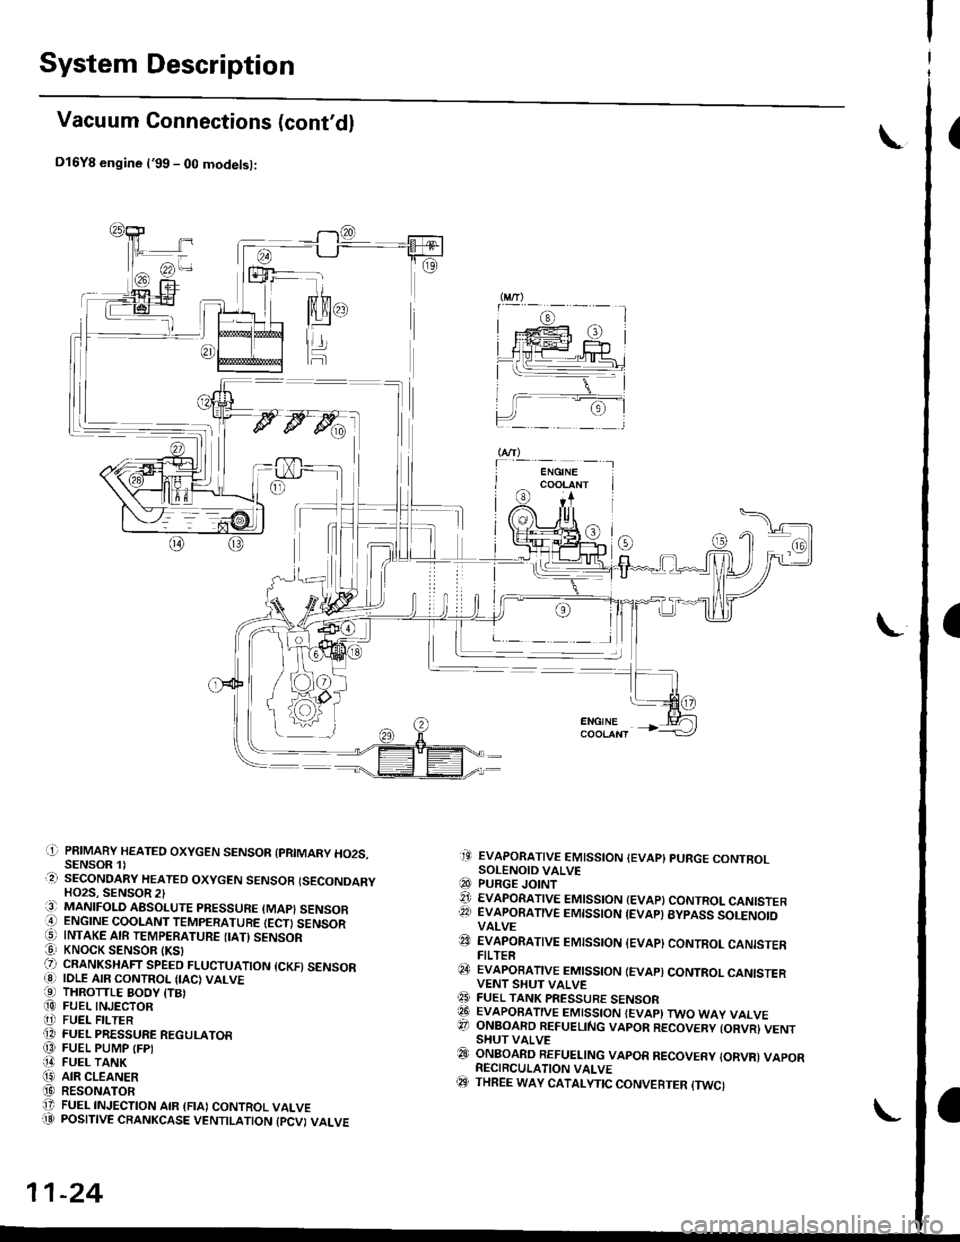 HONDA CIVIC 1998 6.G Workshop Manual System Description
Vacuum Connections (contdl
D16Y8 engine l99 - 00 modetsl:
(]-i PAIMARY HEATEO OXYGEN SENSOR {PRIMARY HO2S,SENSOR 1)..2r SECONOARY HEATEO OXycEN SENSOB ISECONDARYHO2S, SENSOR 2li3)